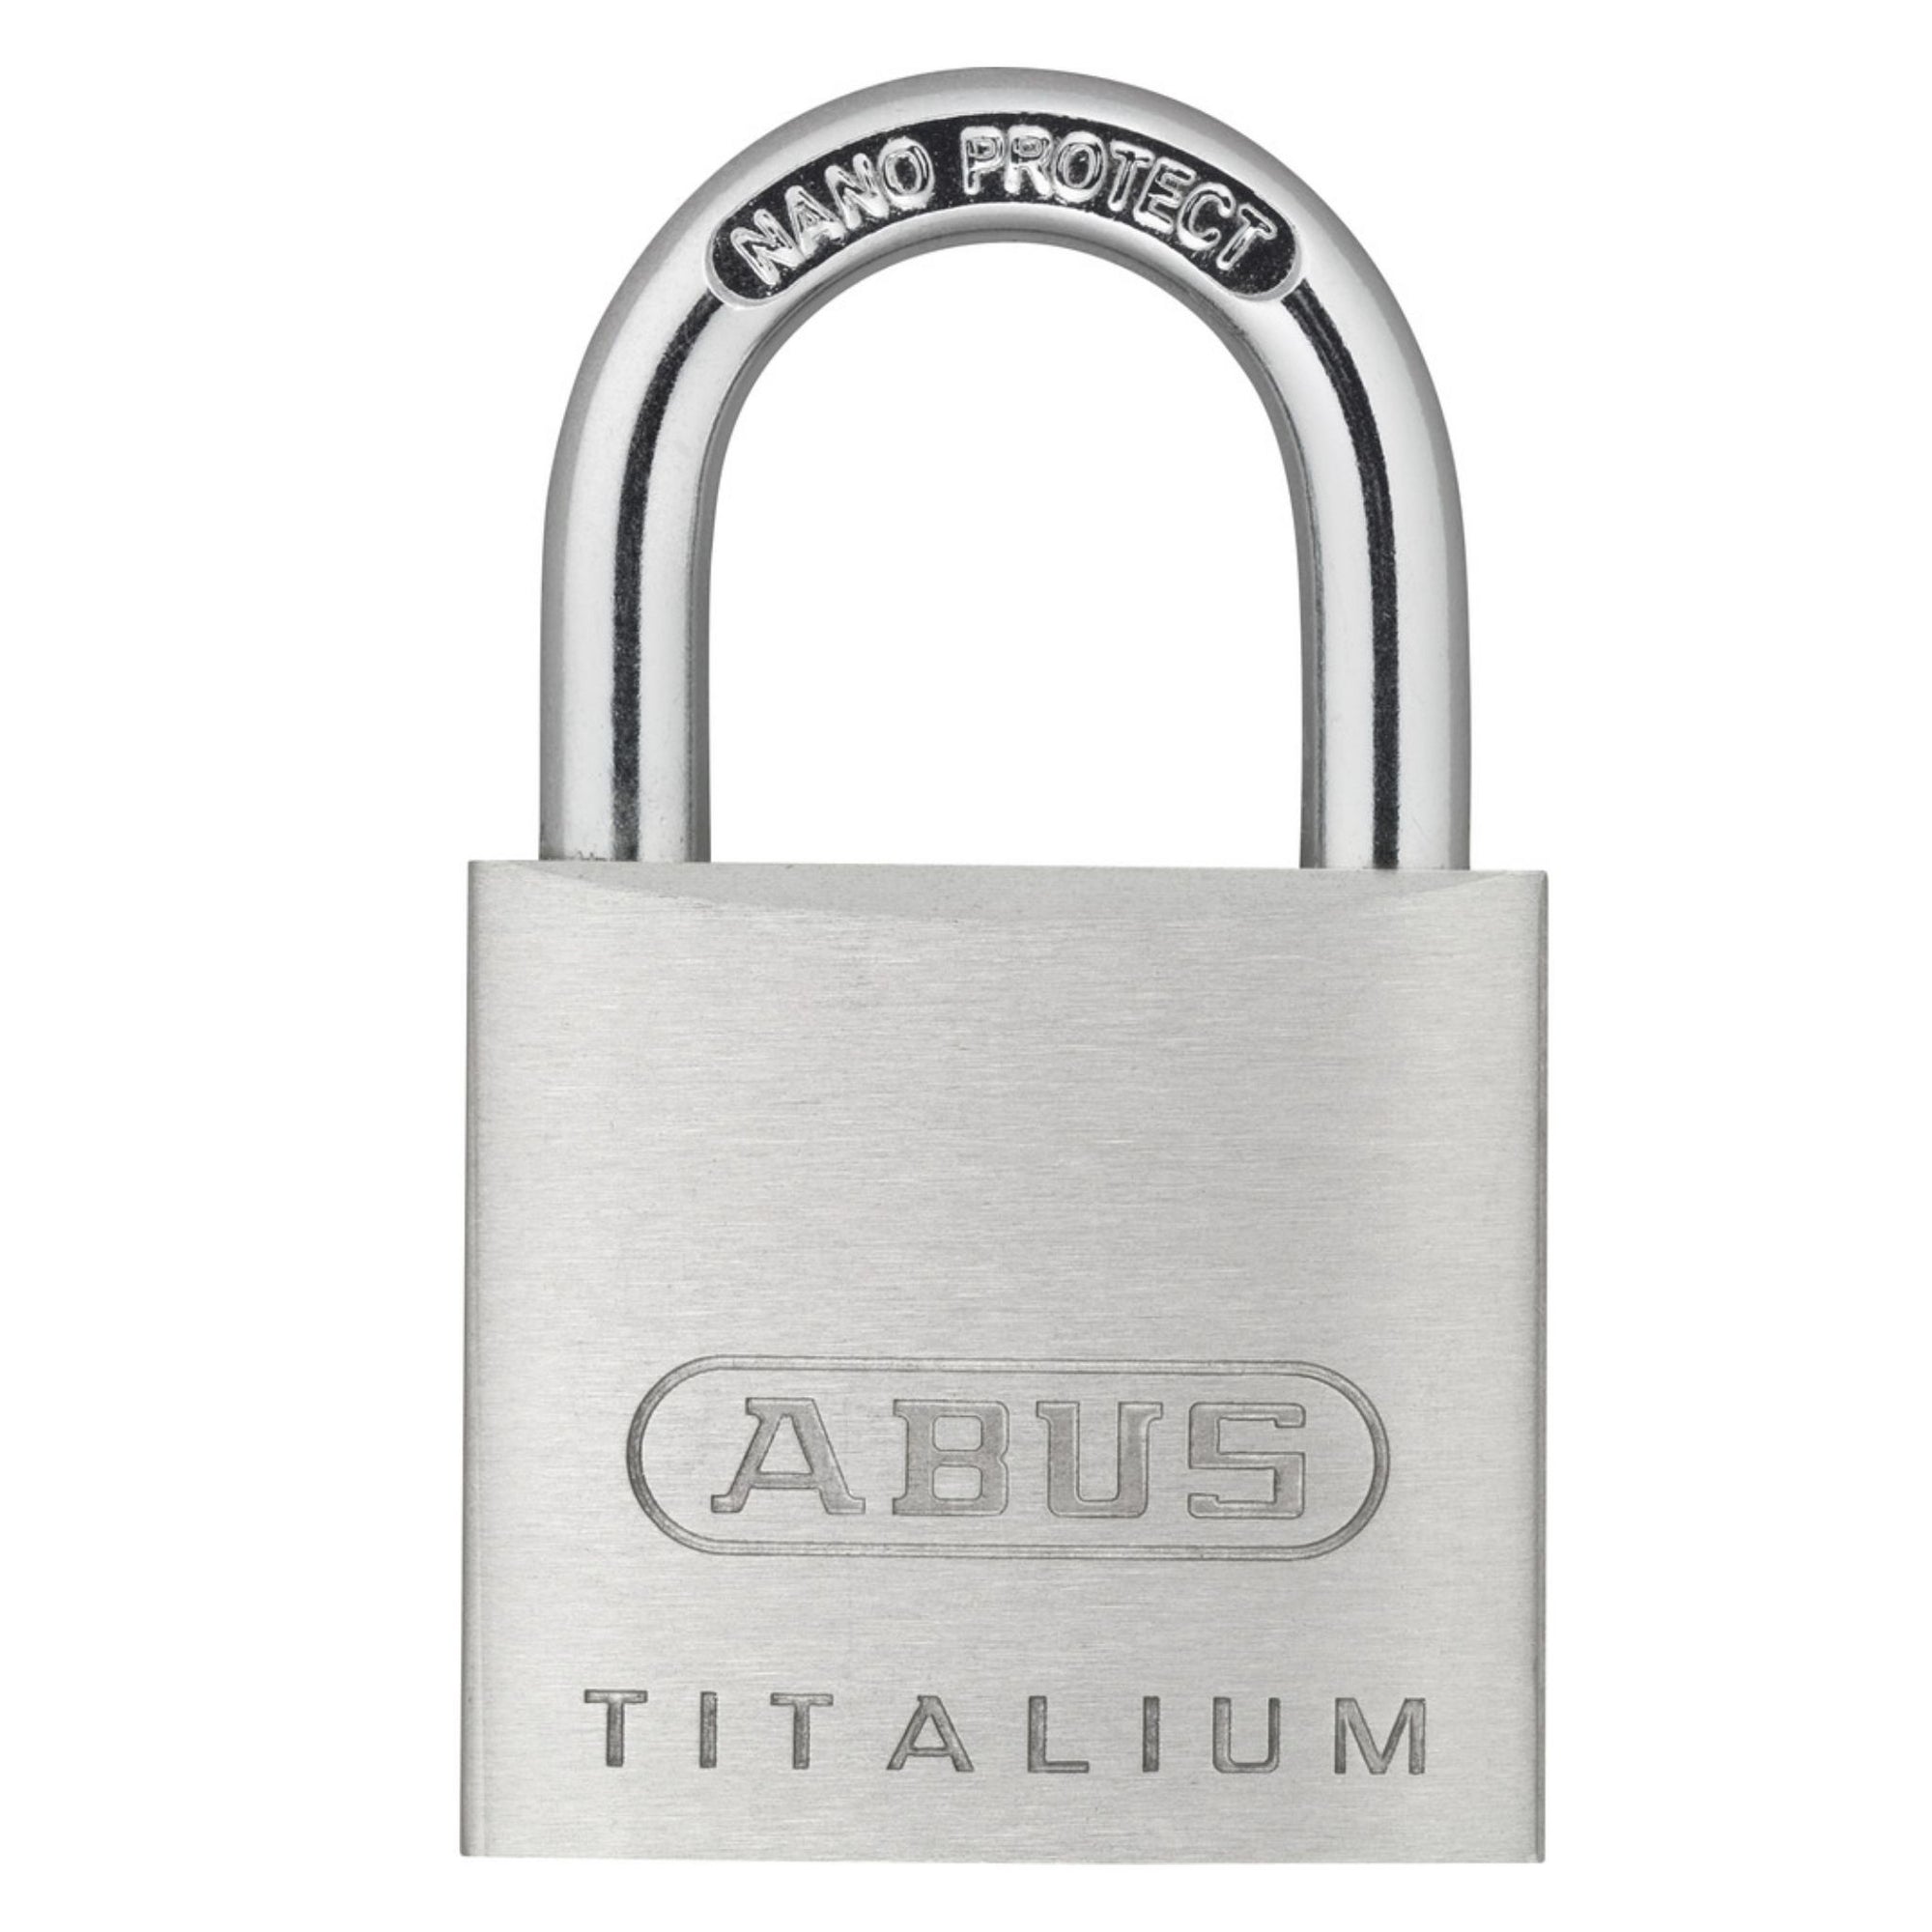 Abus 64TI/30 KA 6311 Titalium Lock Keyed Alike to Match Existing Key Number KA6311 - The Lock Source